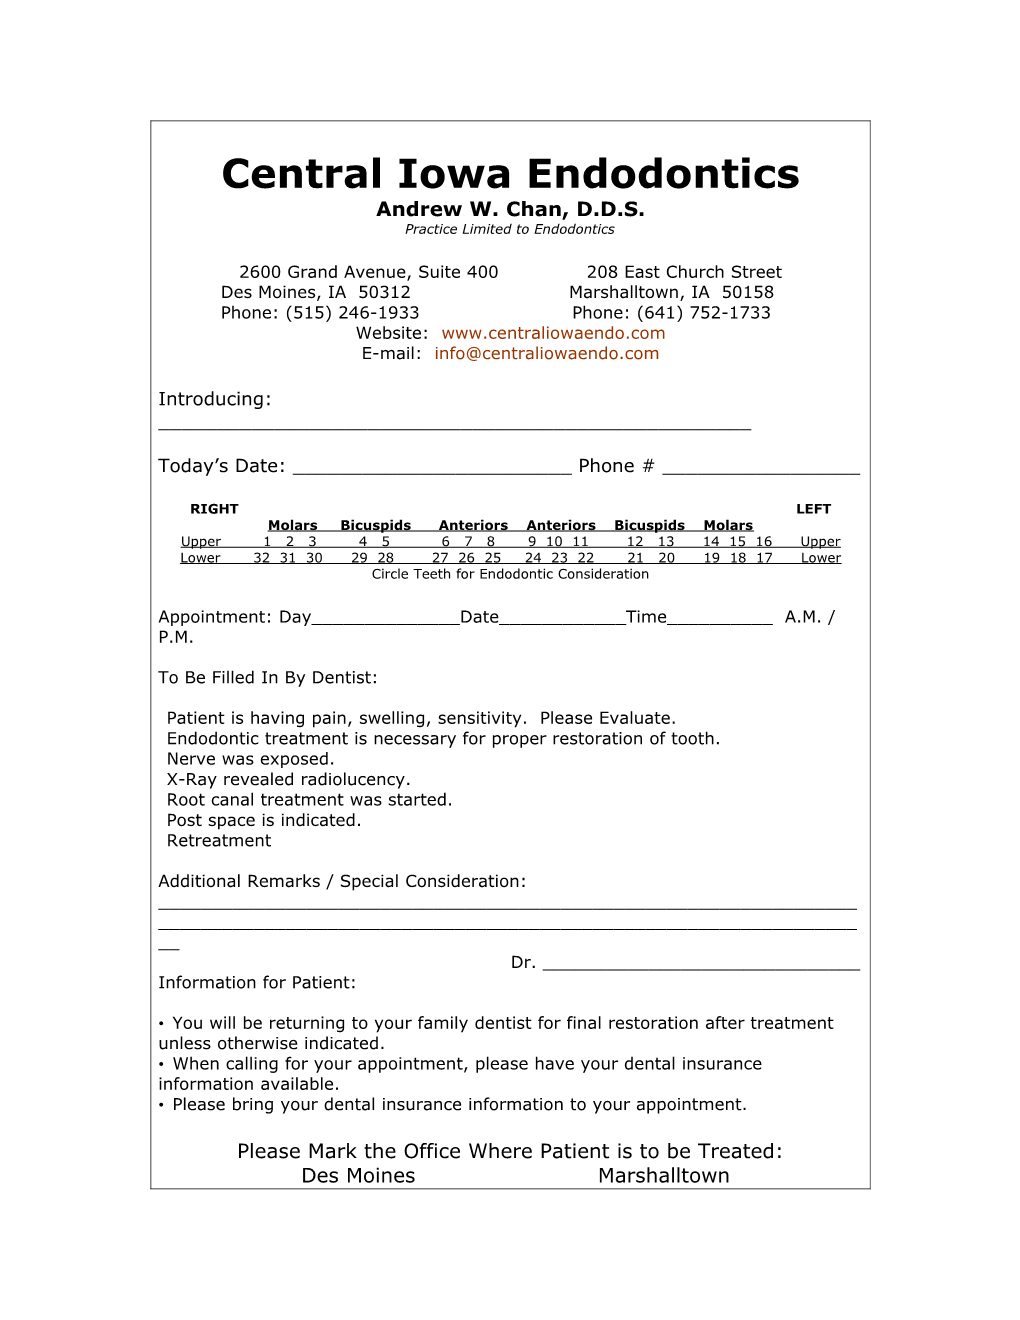 Central Iowa Endodontics